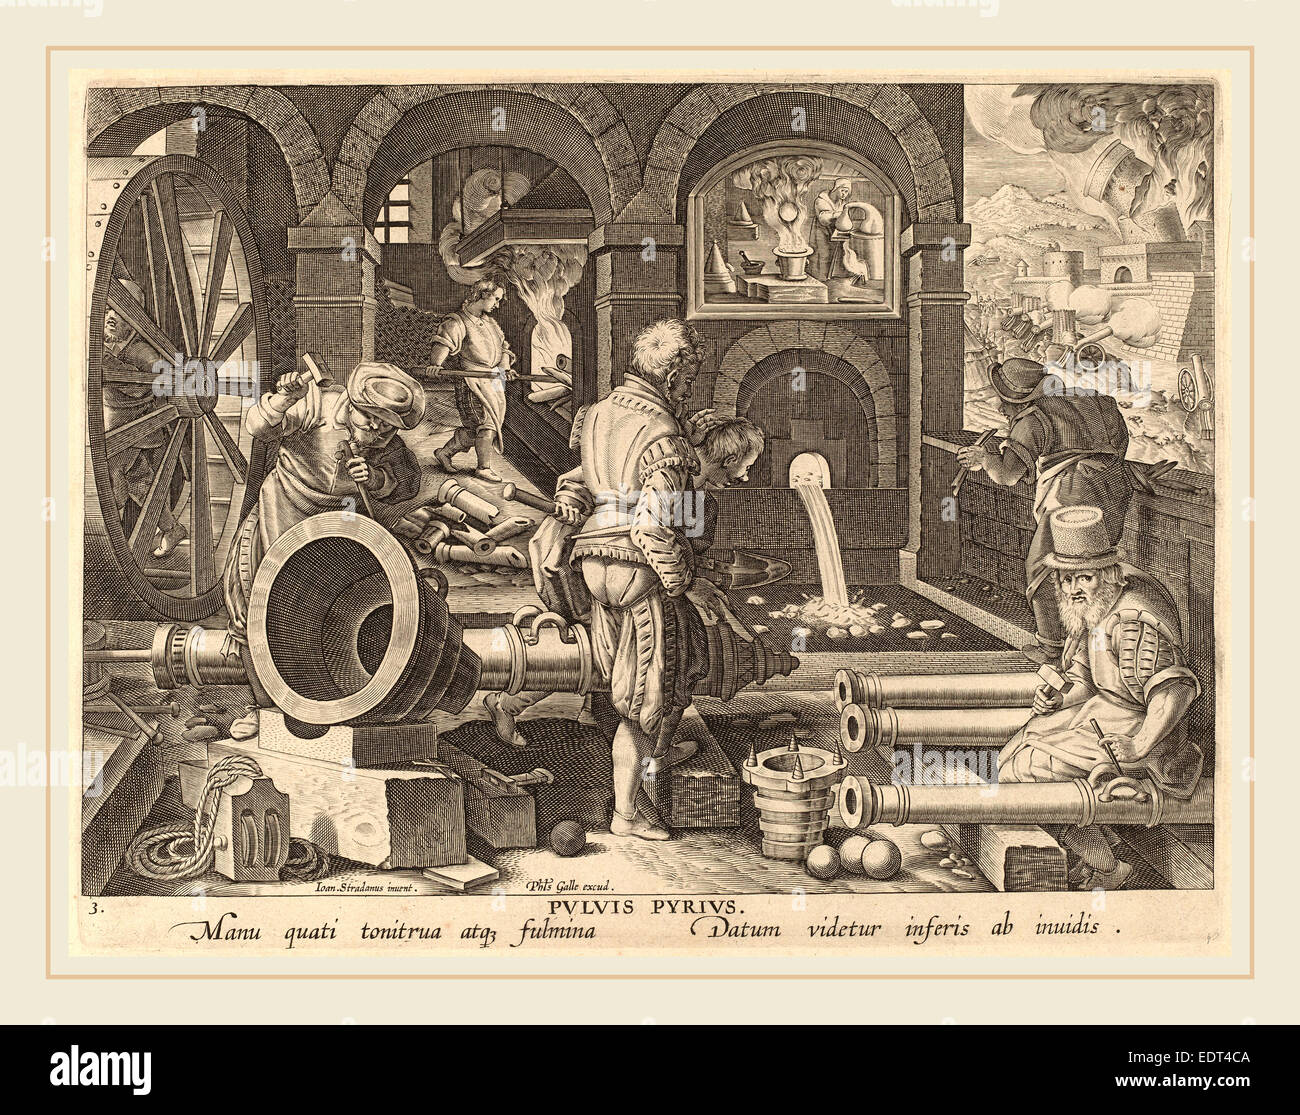 Theodor Galle after Jan van der Straet (Flemish, c. 1571-1633), Casting of Cannons: pl.3, c. 1580-1590, engraving Stock Photo